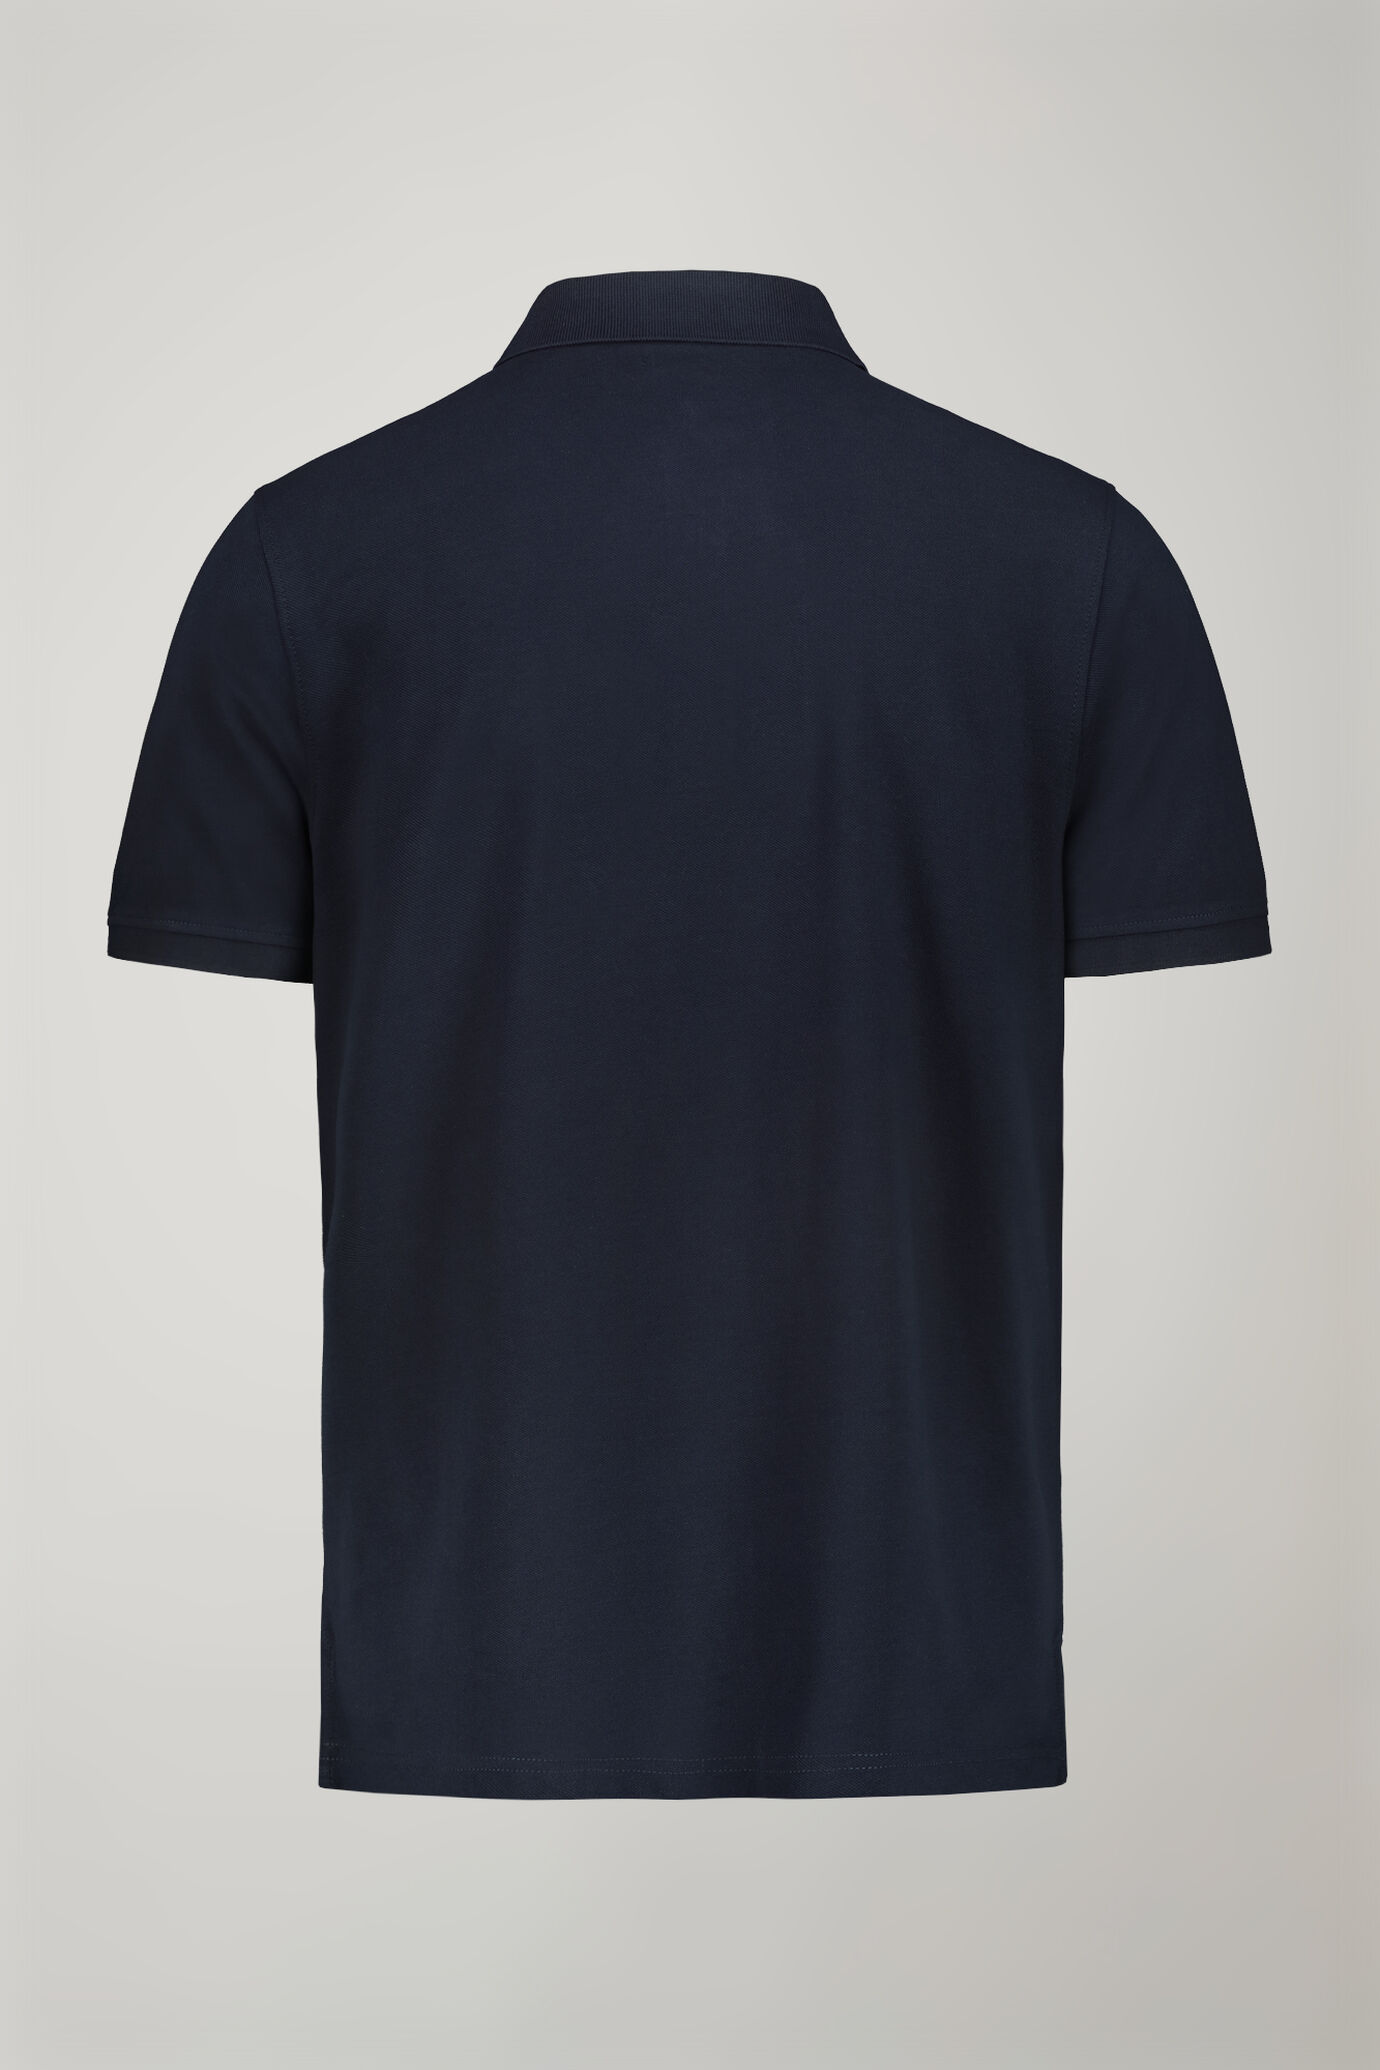 Men’s short sleeve polo shirt 100% piquet cotton regular fit image number 5